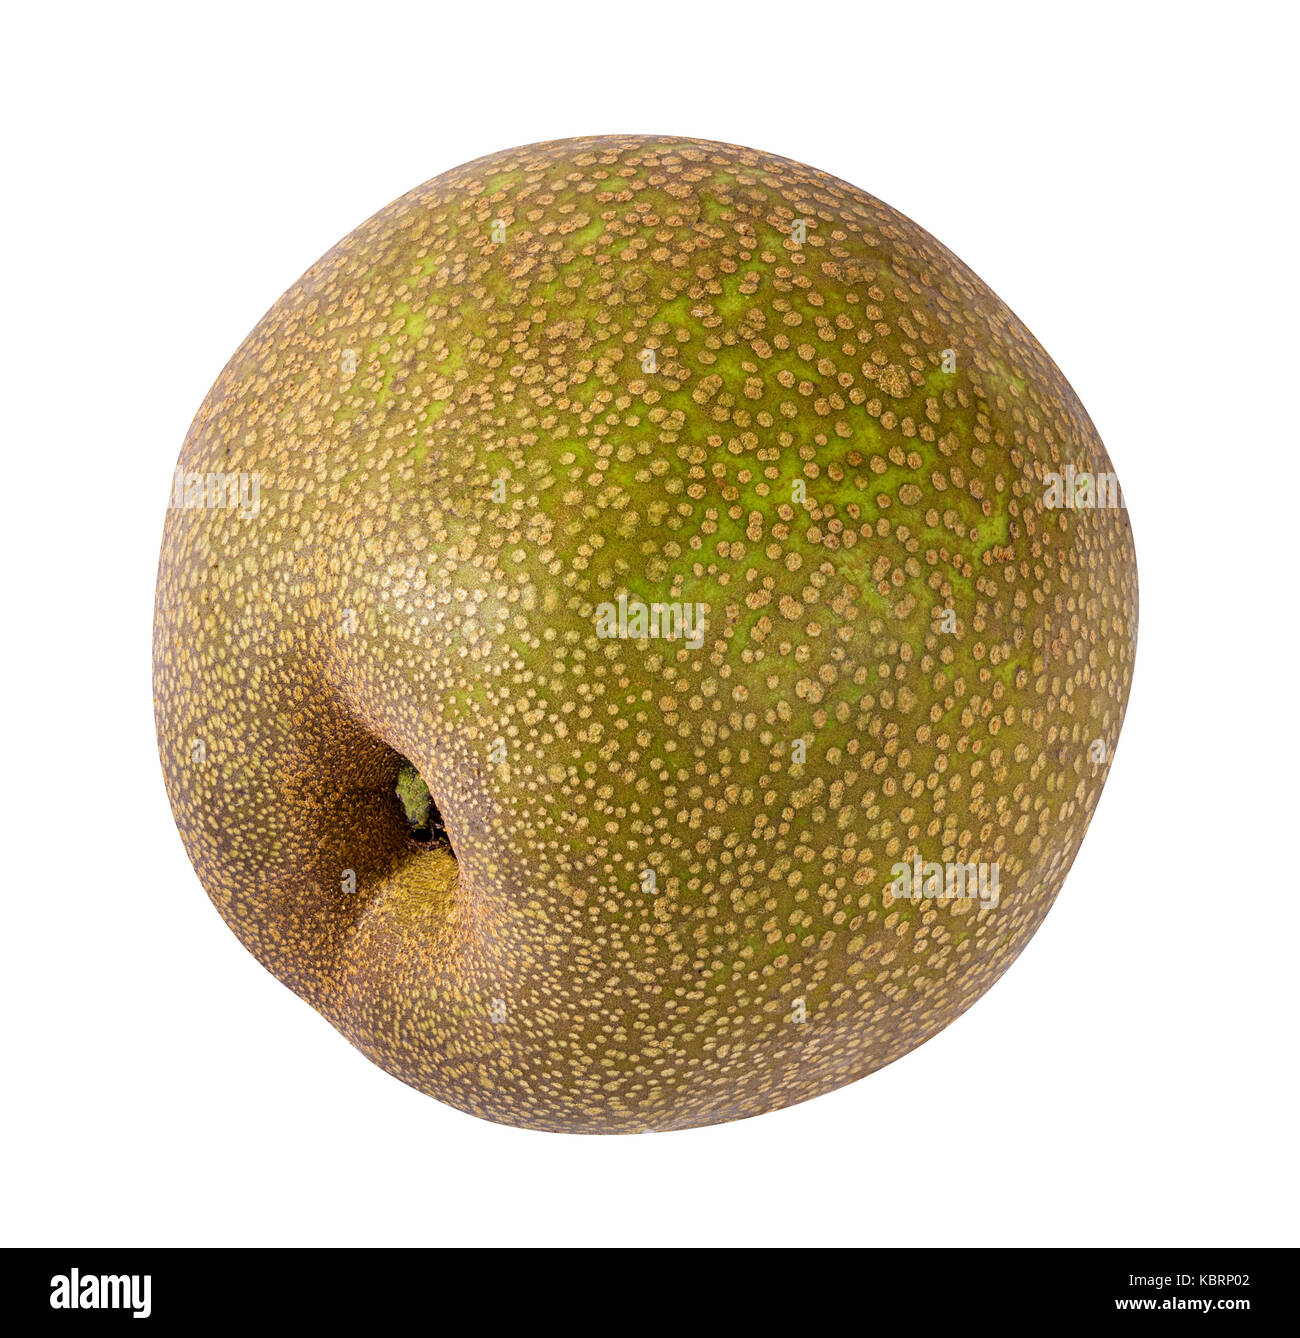 Asian pear(Pyrus pyrifolia ) isolated on white background. Stock Photo